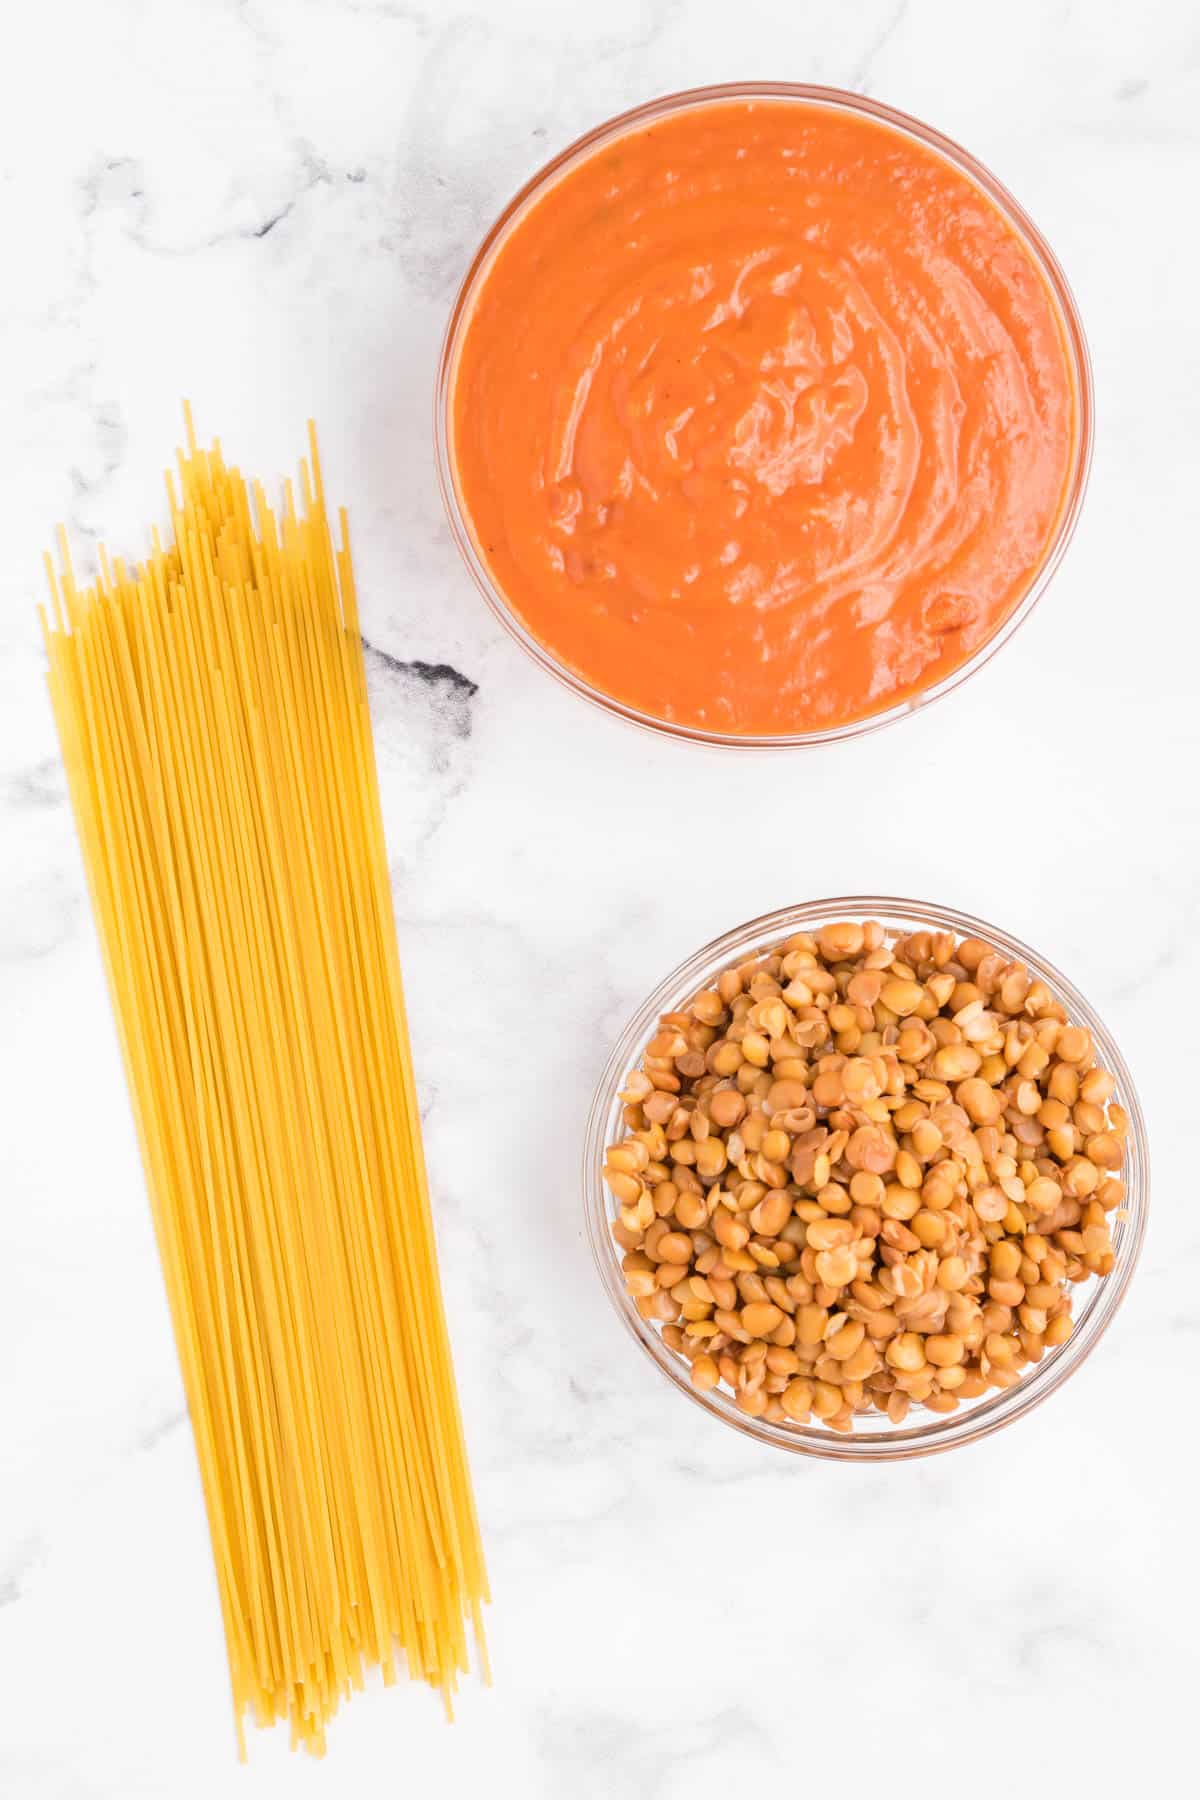 Ingredients needed to make 3 ingredient creamy tomato lentil pasta.